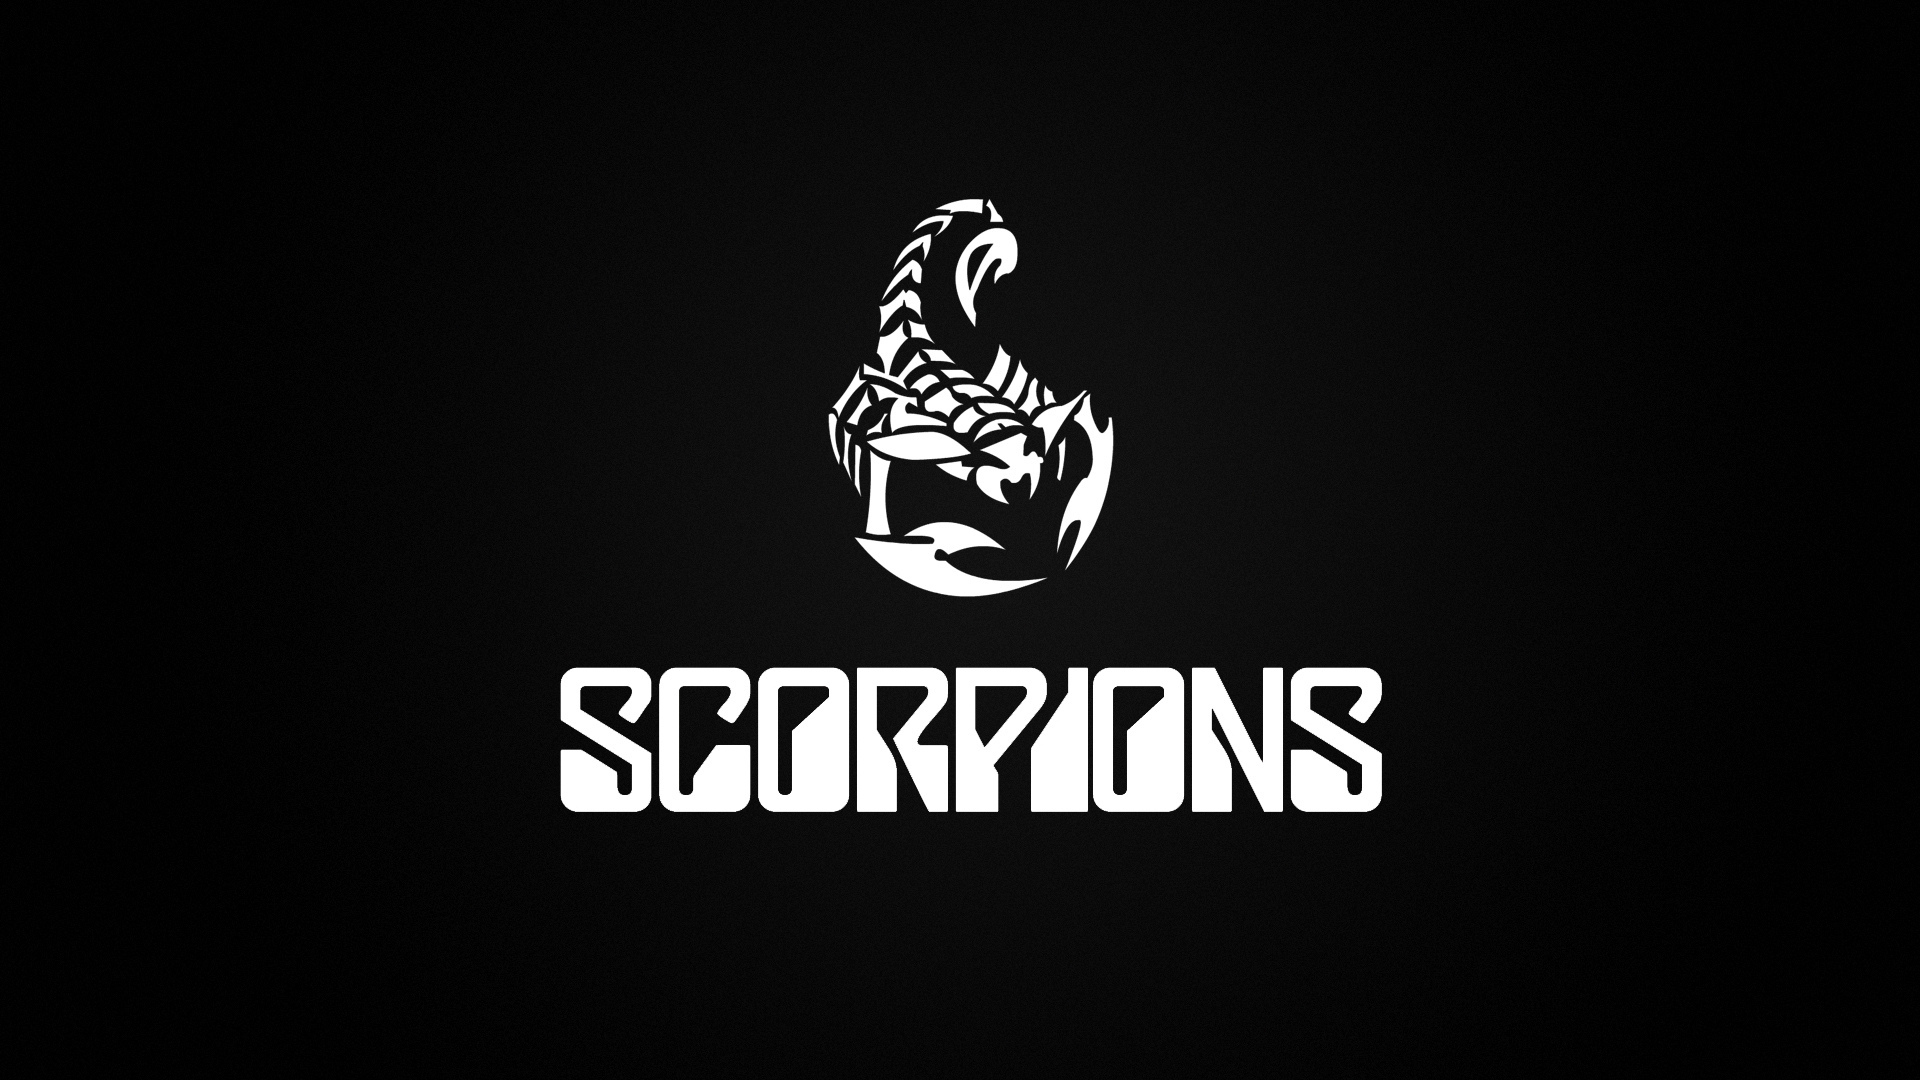 scorpions HD wallpaper, background